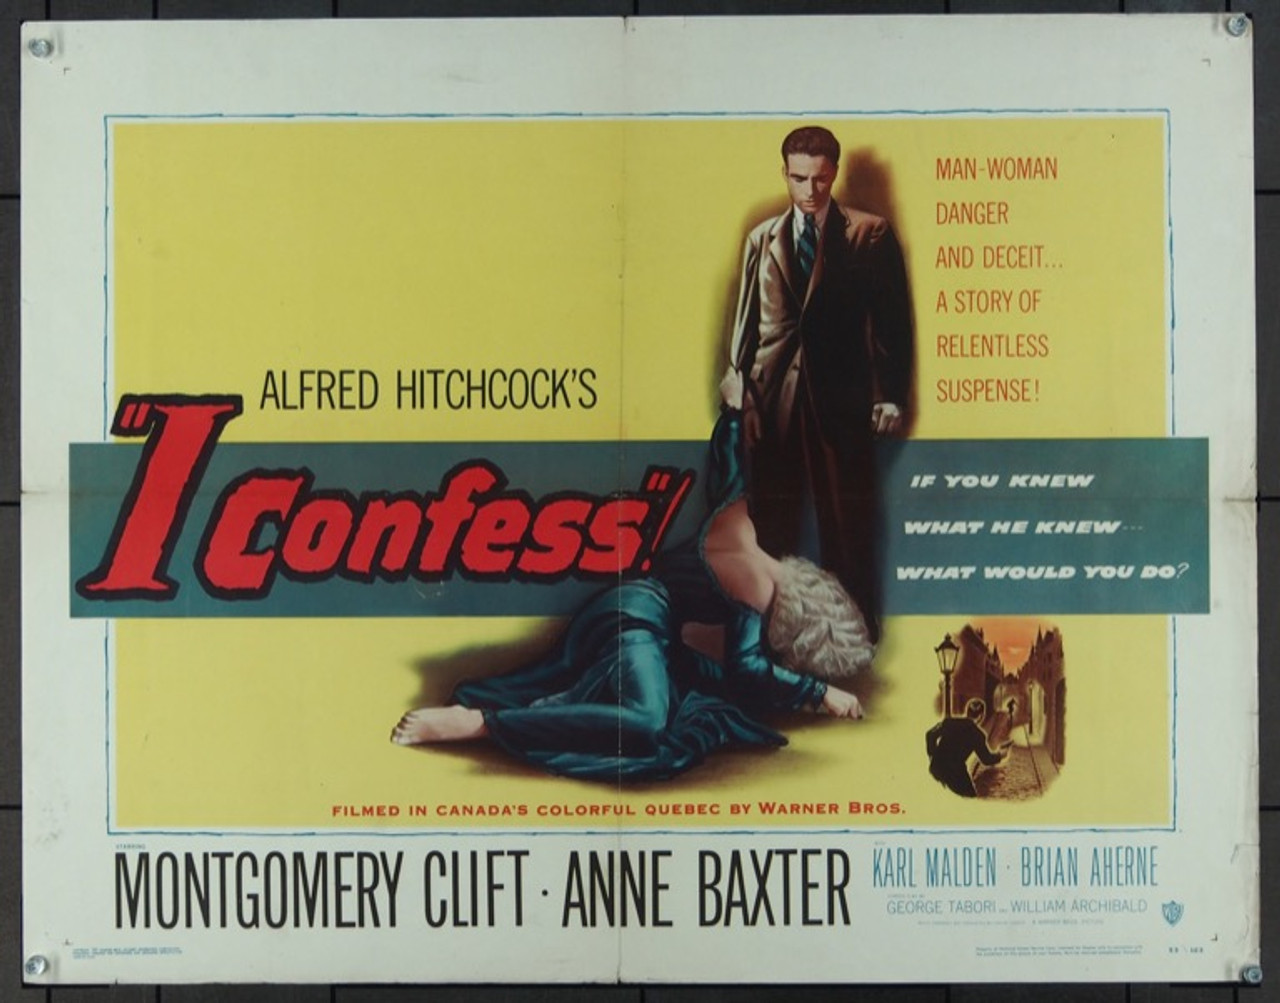 Original I Confess (1953) movie poster in C8 condition for $$275.00